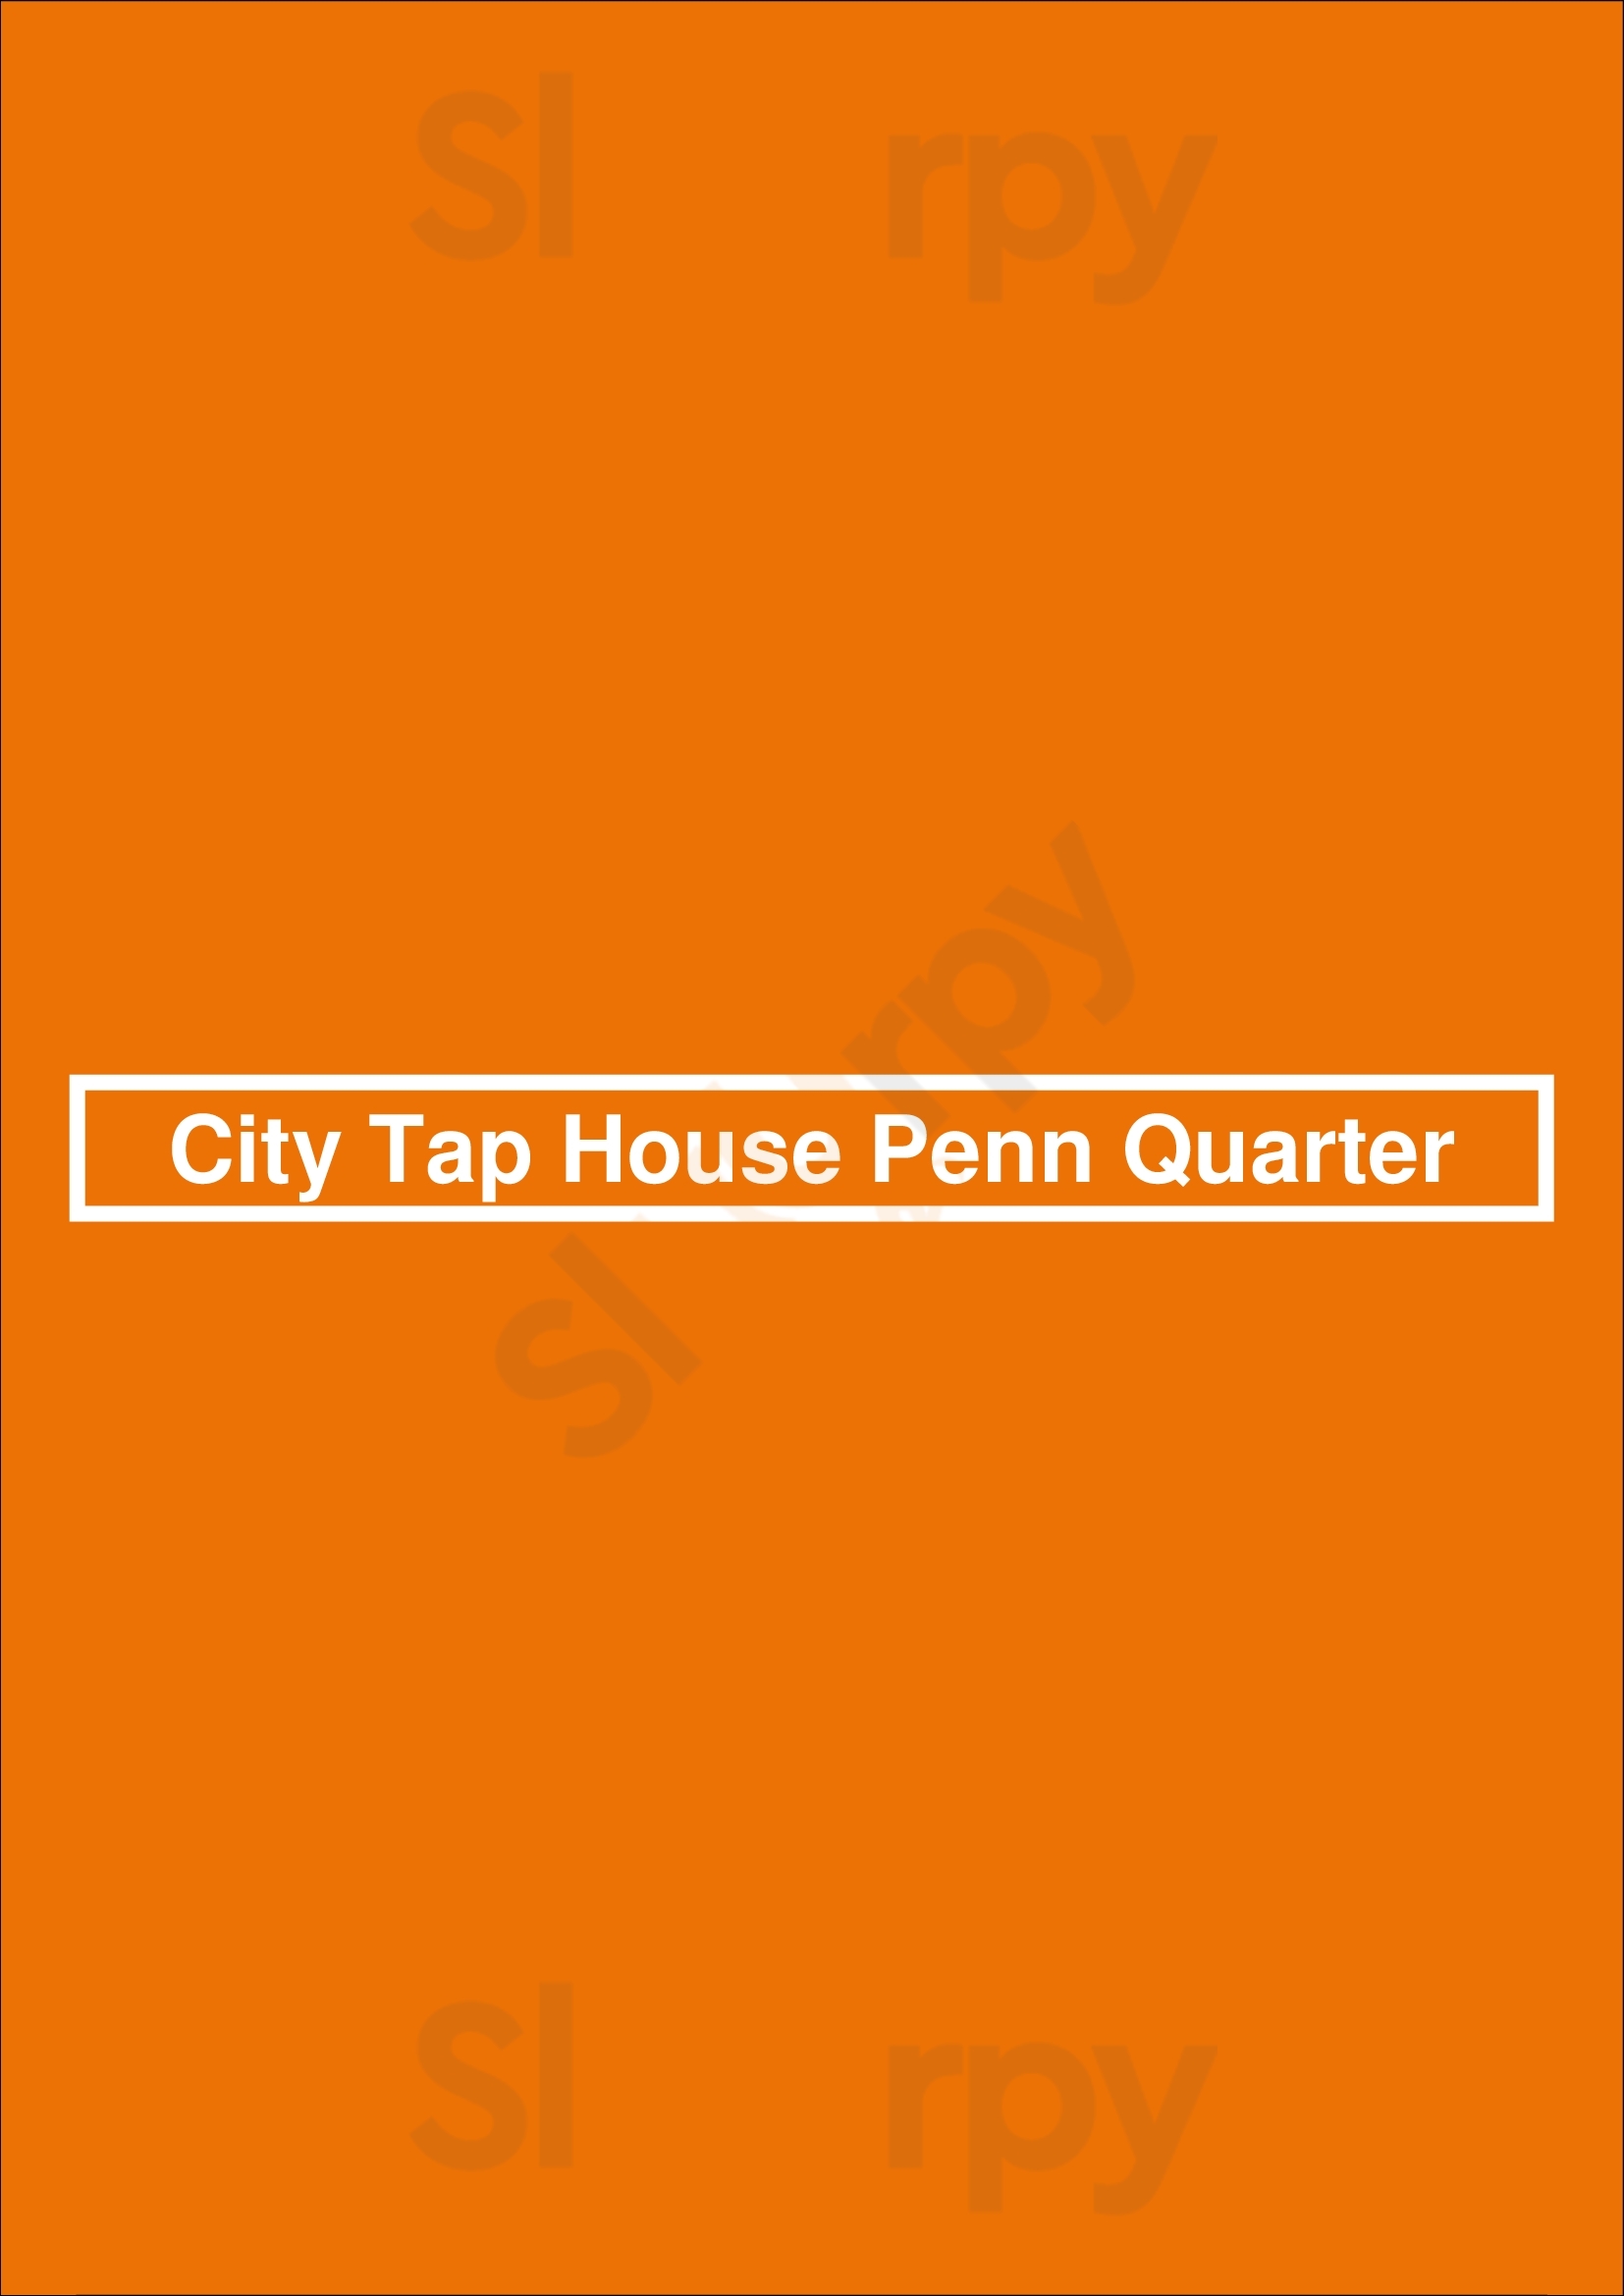 City Tap House Penn Quarter Washington DC Menu - 1